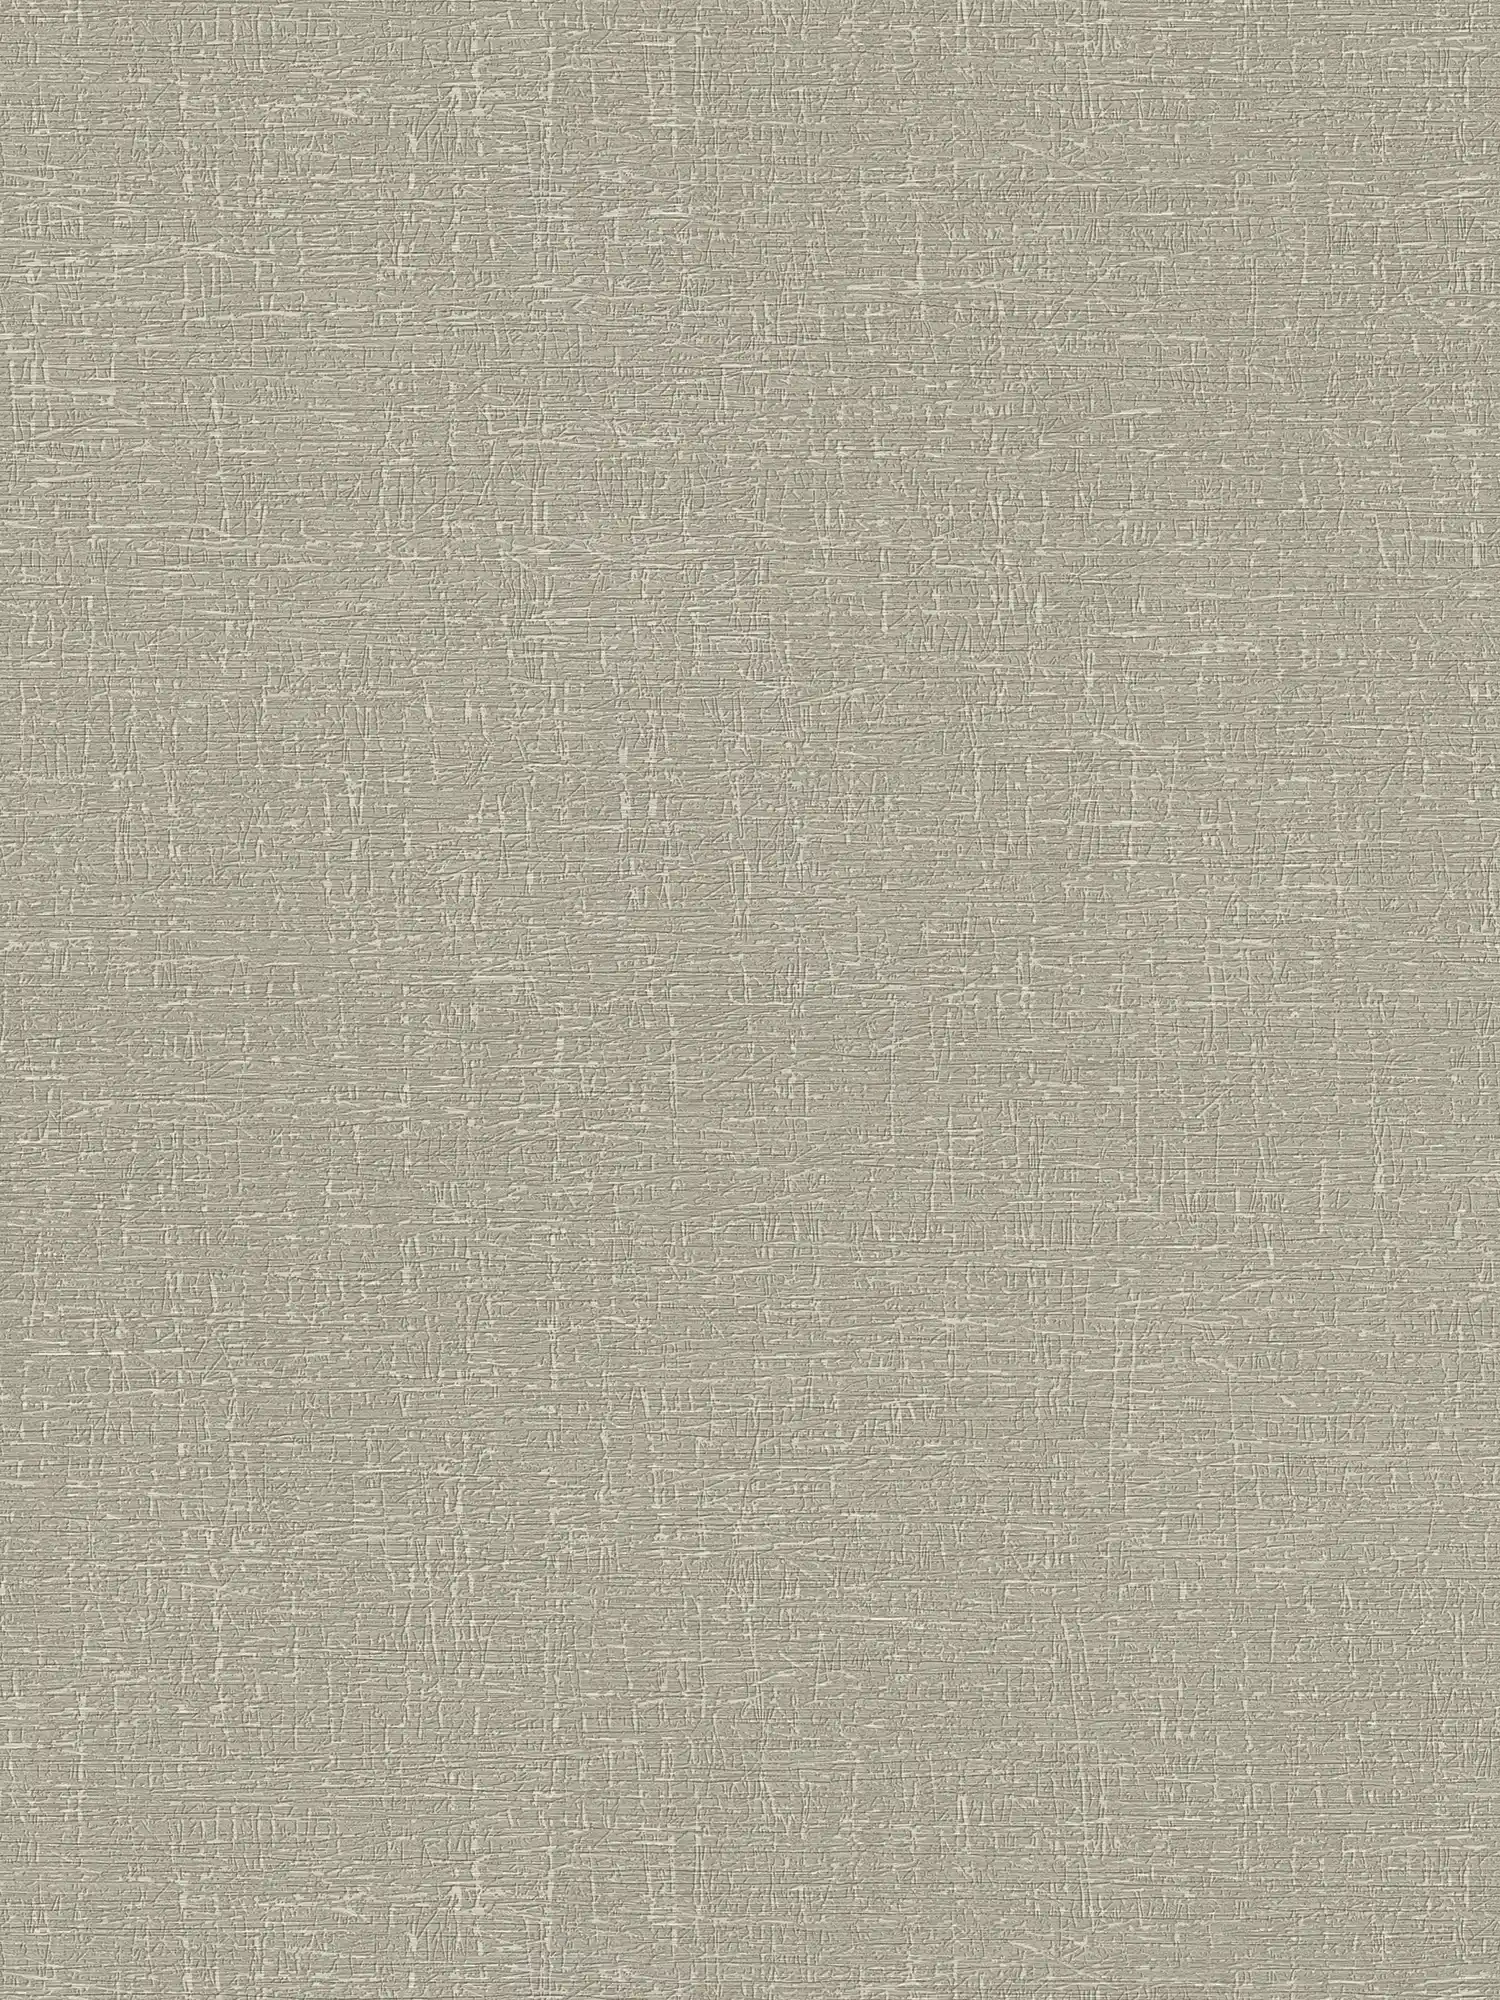 Textured plain wallpaper in matt look - grey, brown
